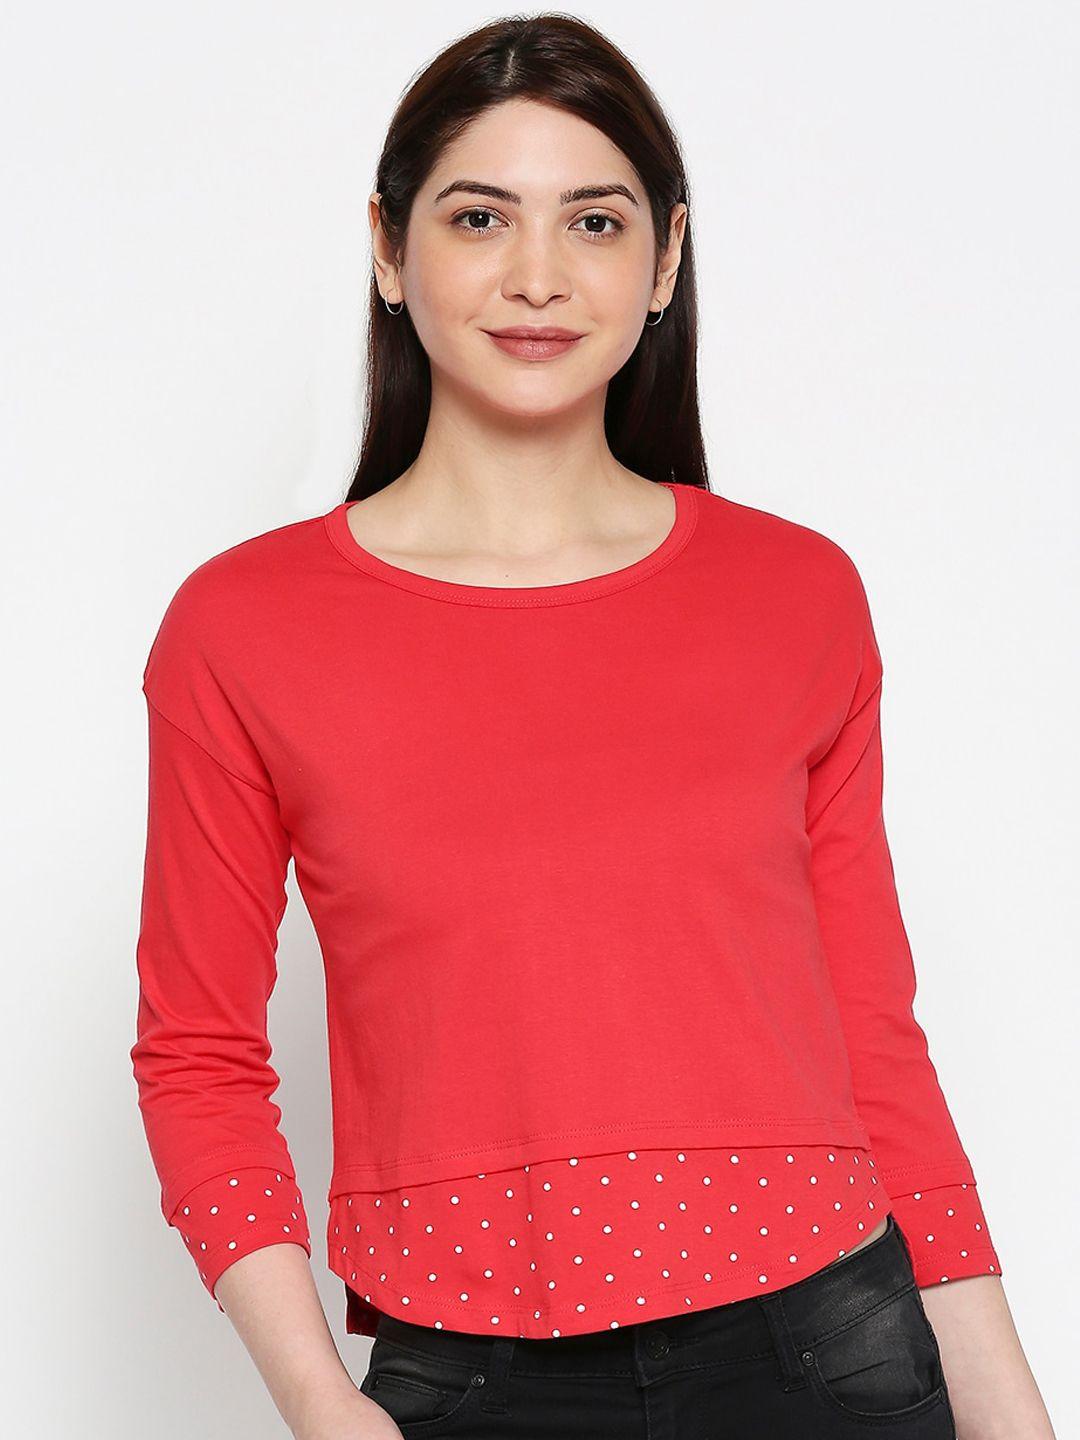 people-women-red-t-shirt